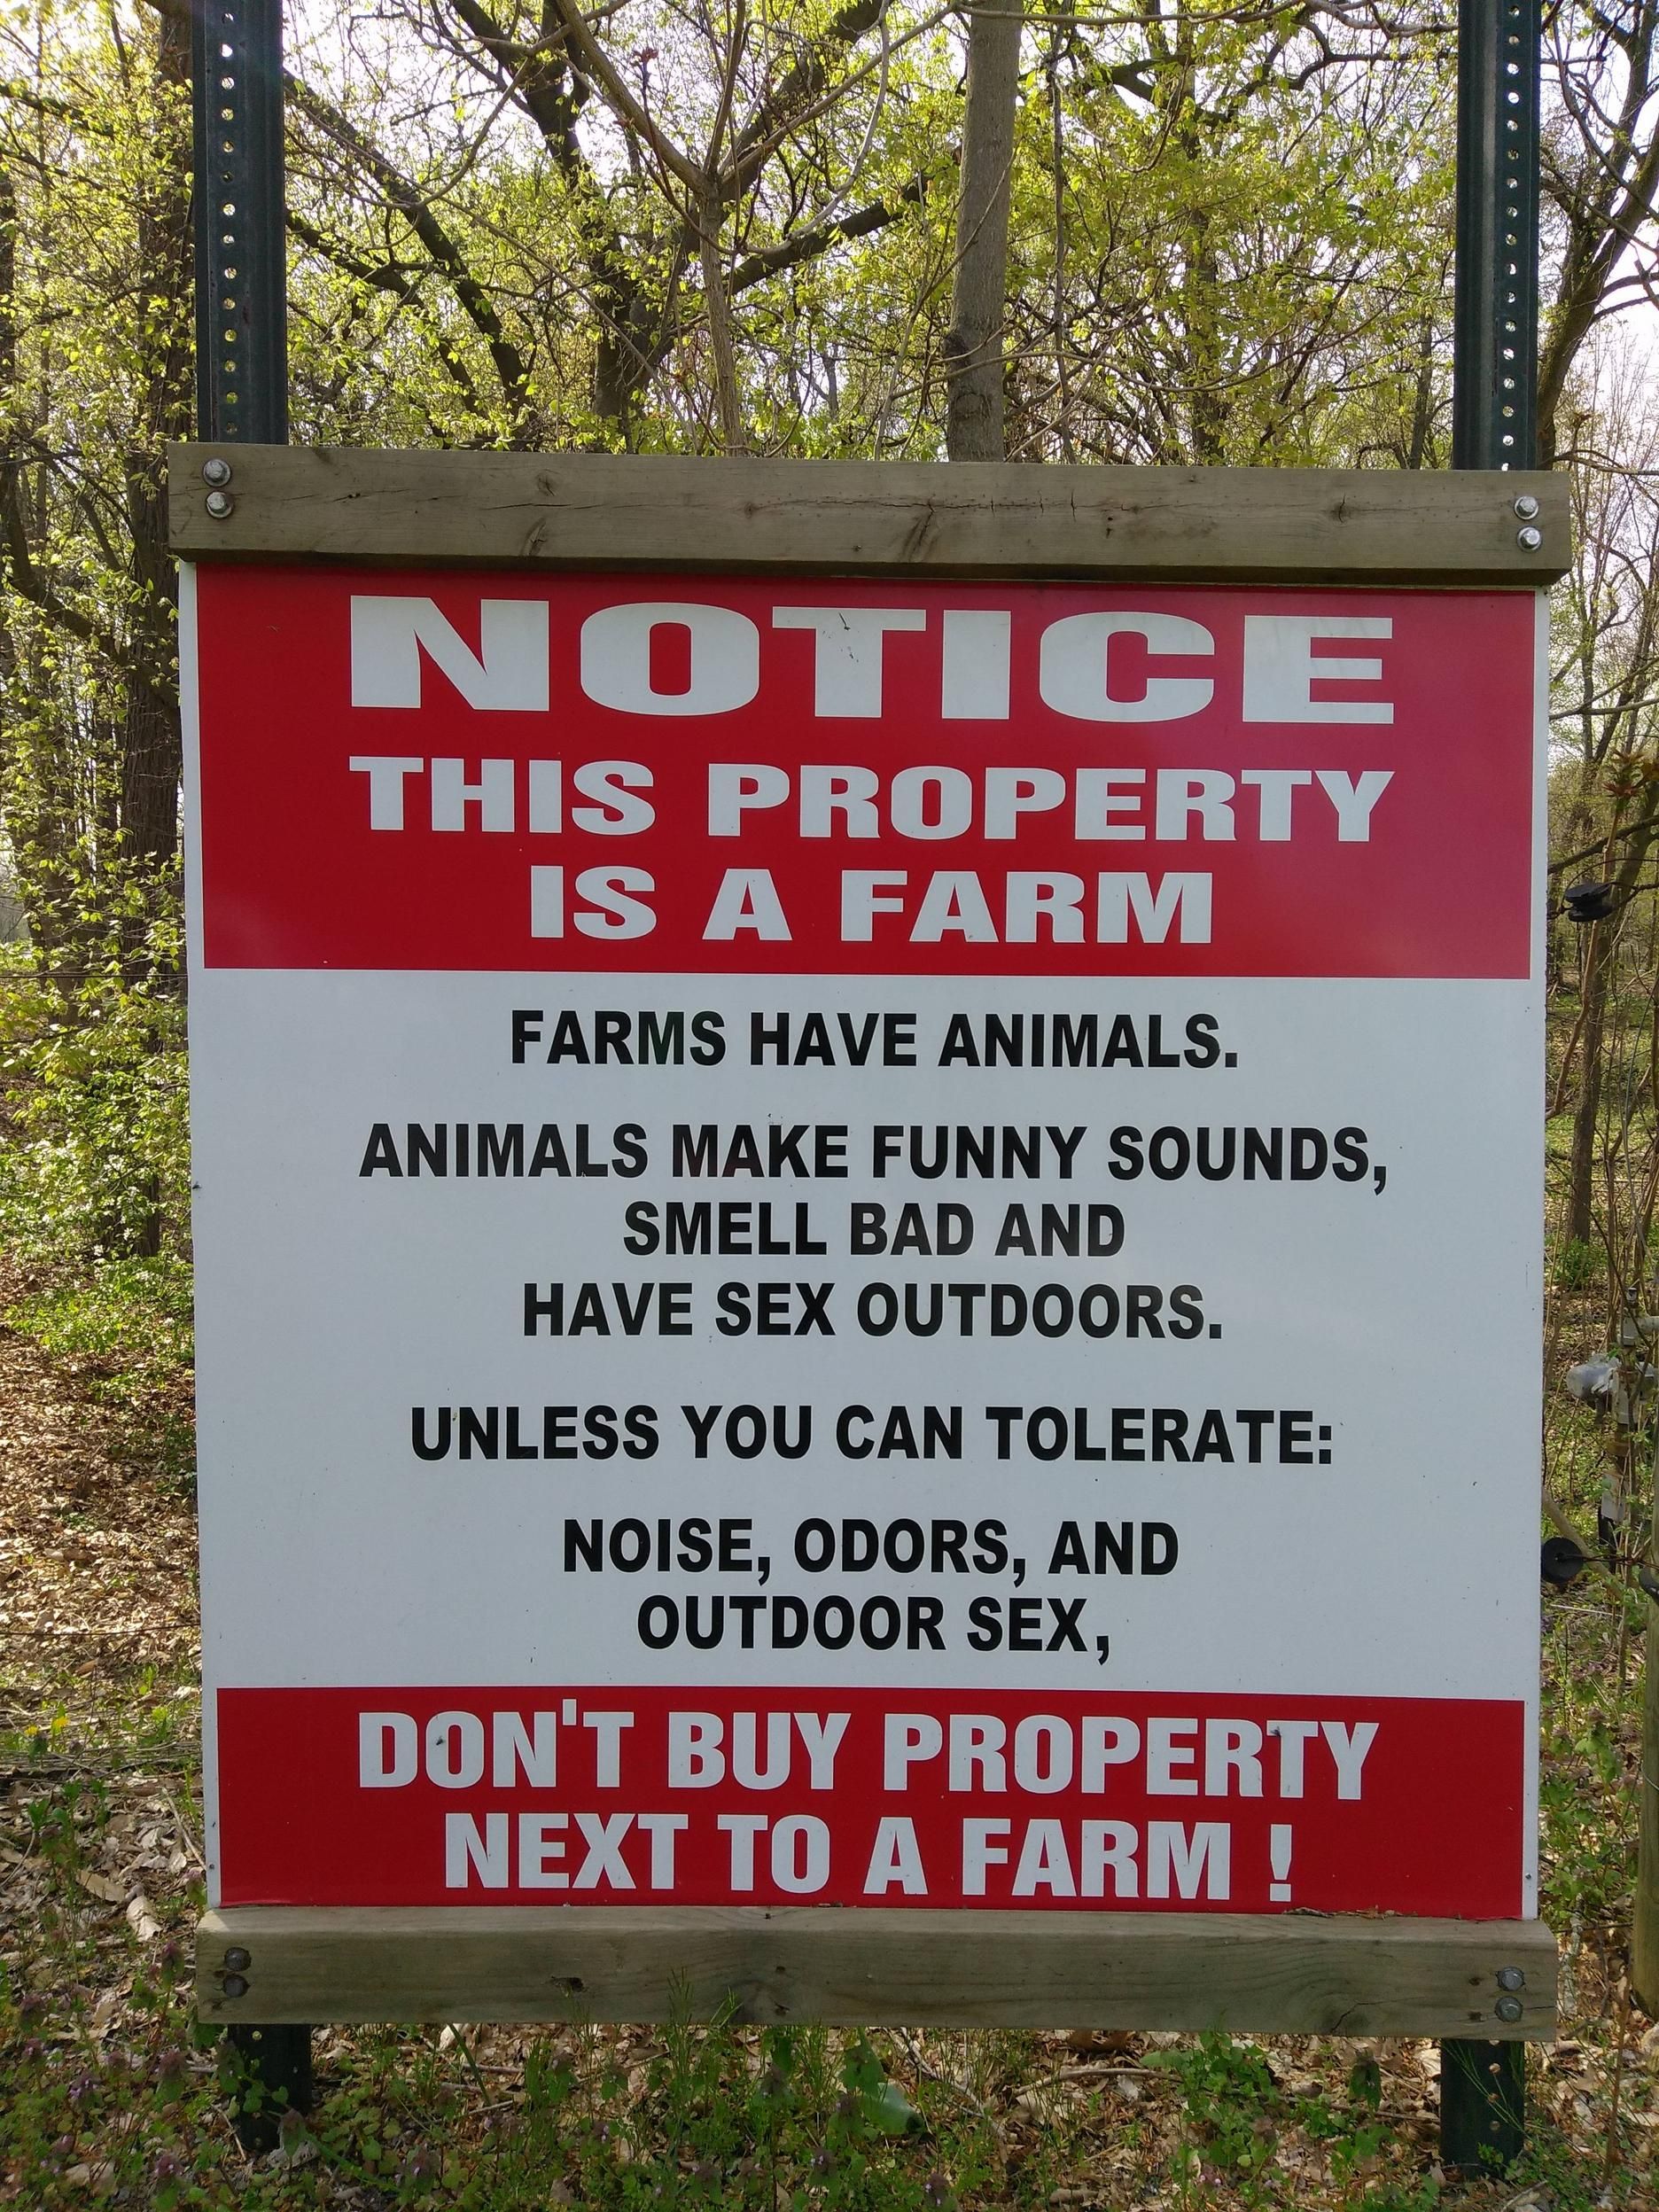 Don't buy property next to a farm...